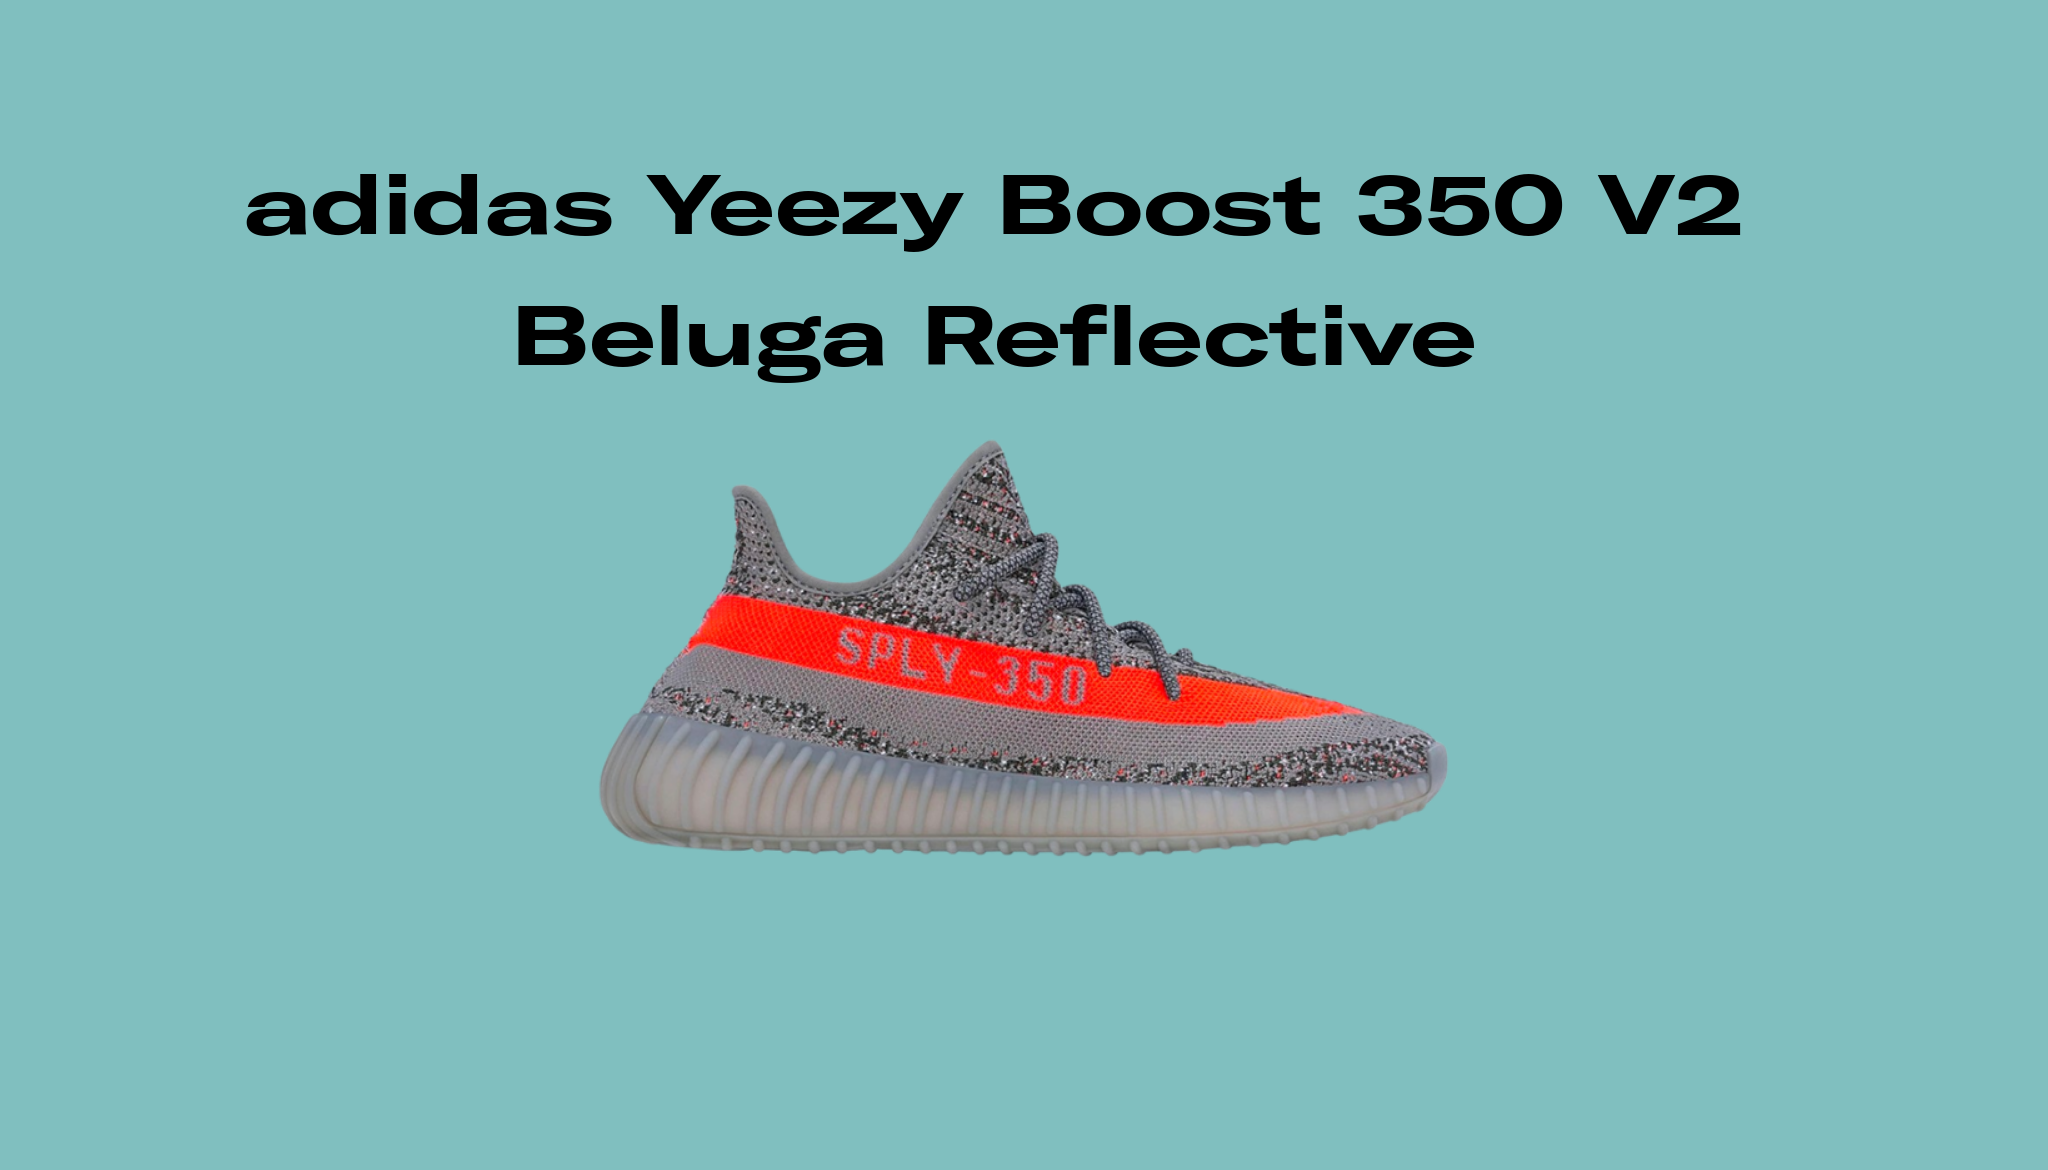 adidas Yeezy Boost 350 V2 Beluga Reflective, Raffles and Release 